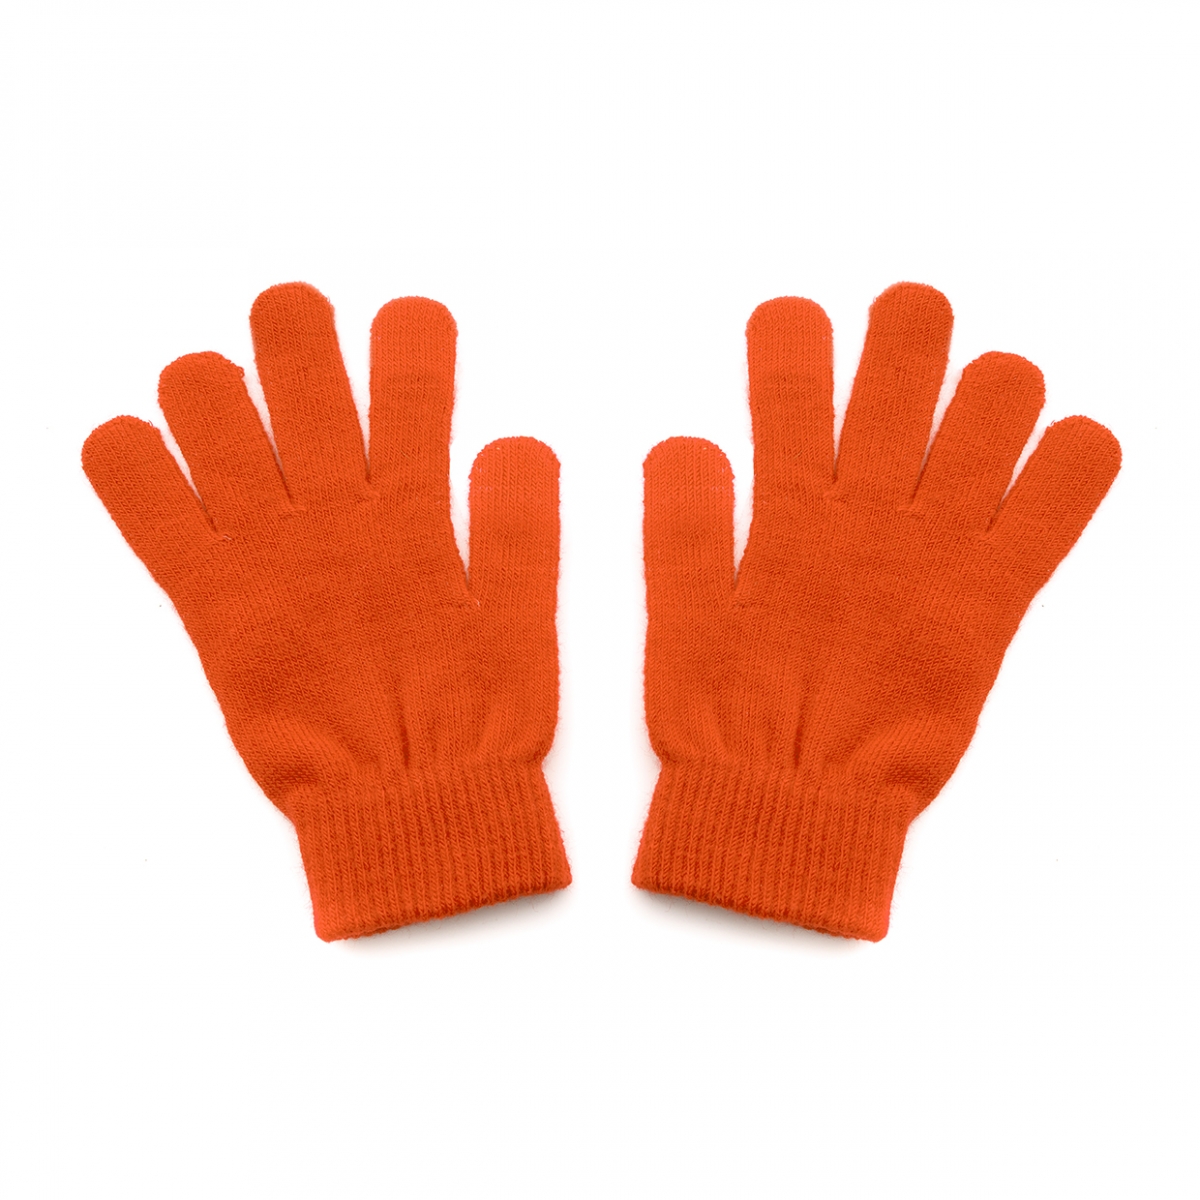 Imagen en la que se ve un par de guantes de color naranja